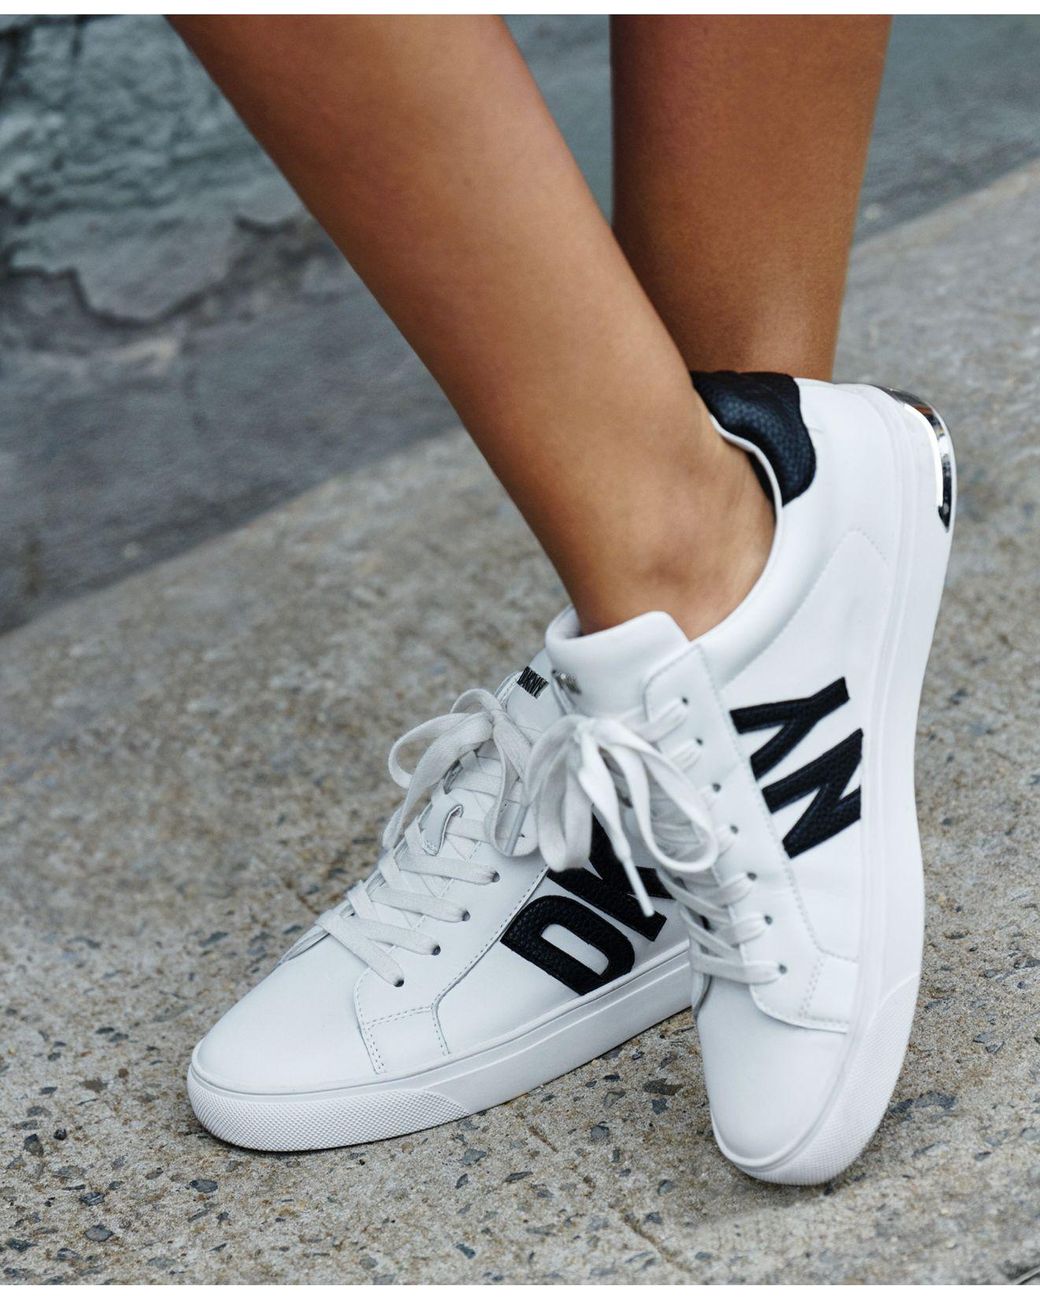 Dkny | Shoes | Dkny Bari Black Platform Sneakers 9m | Poshmark